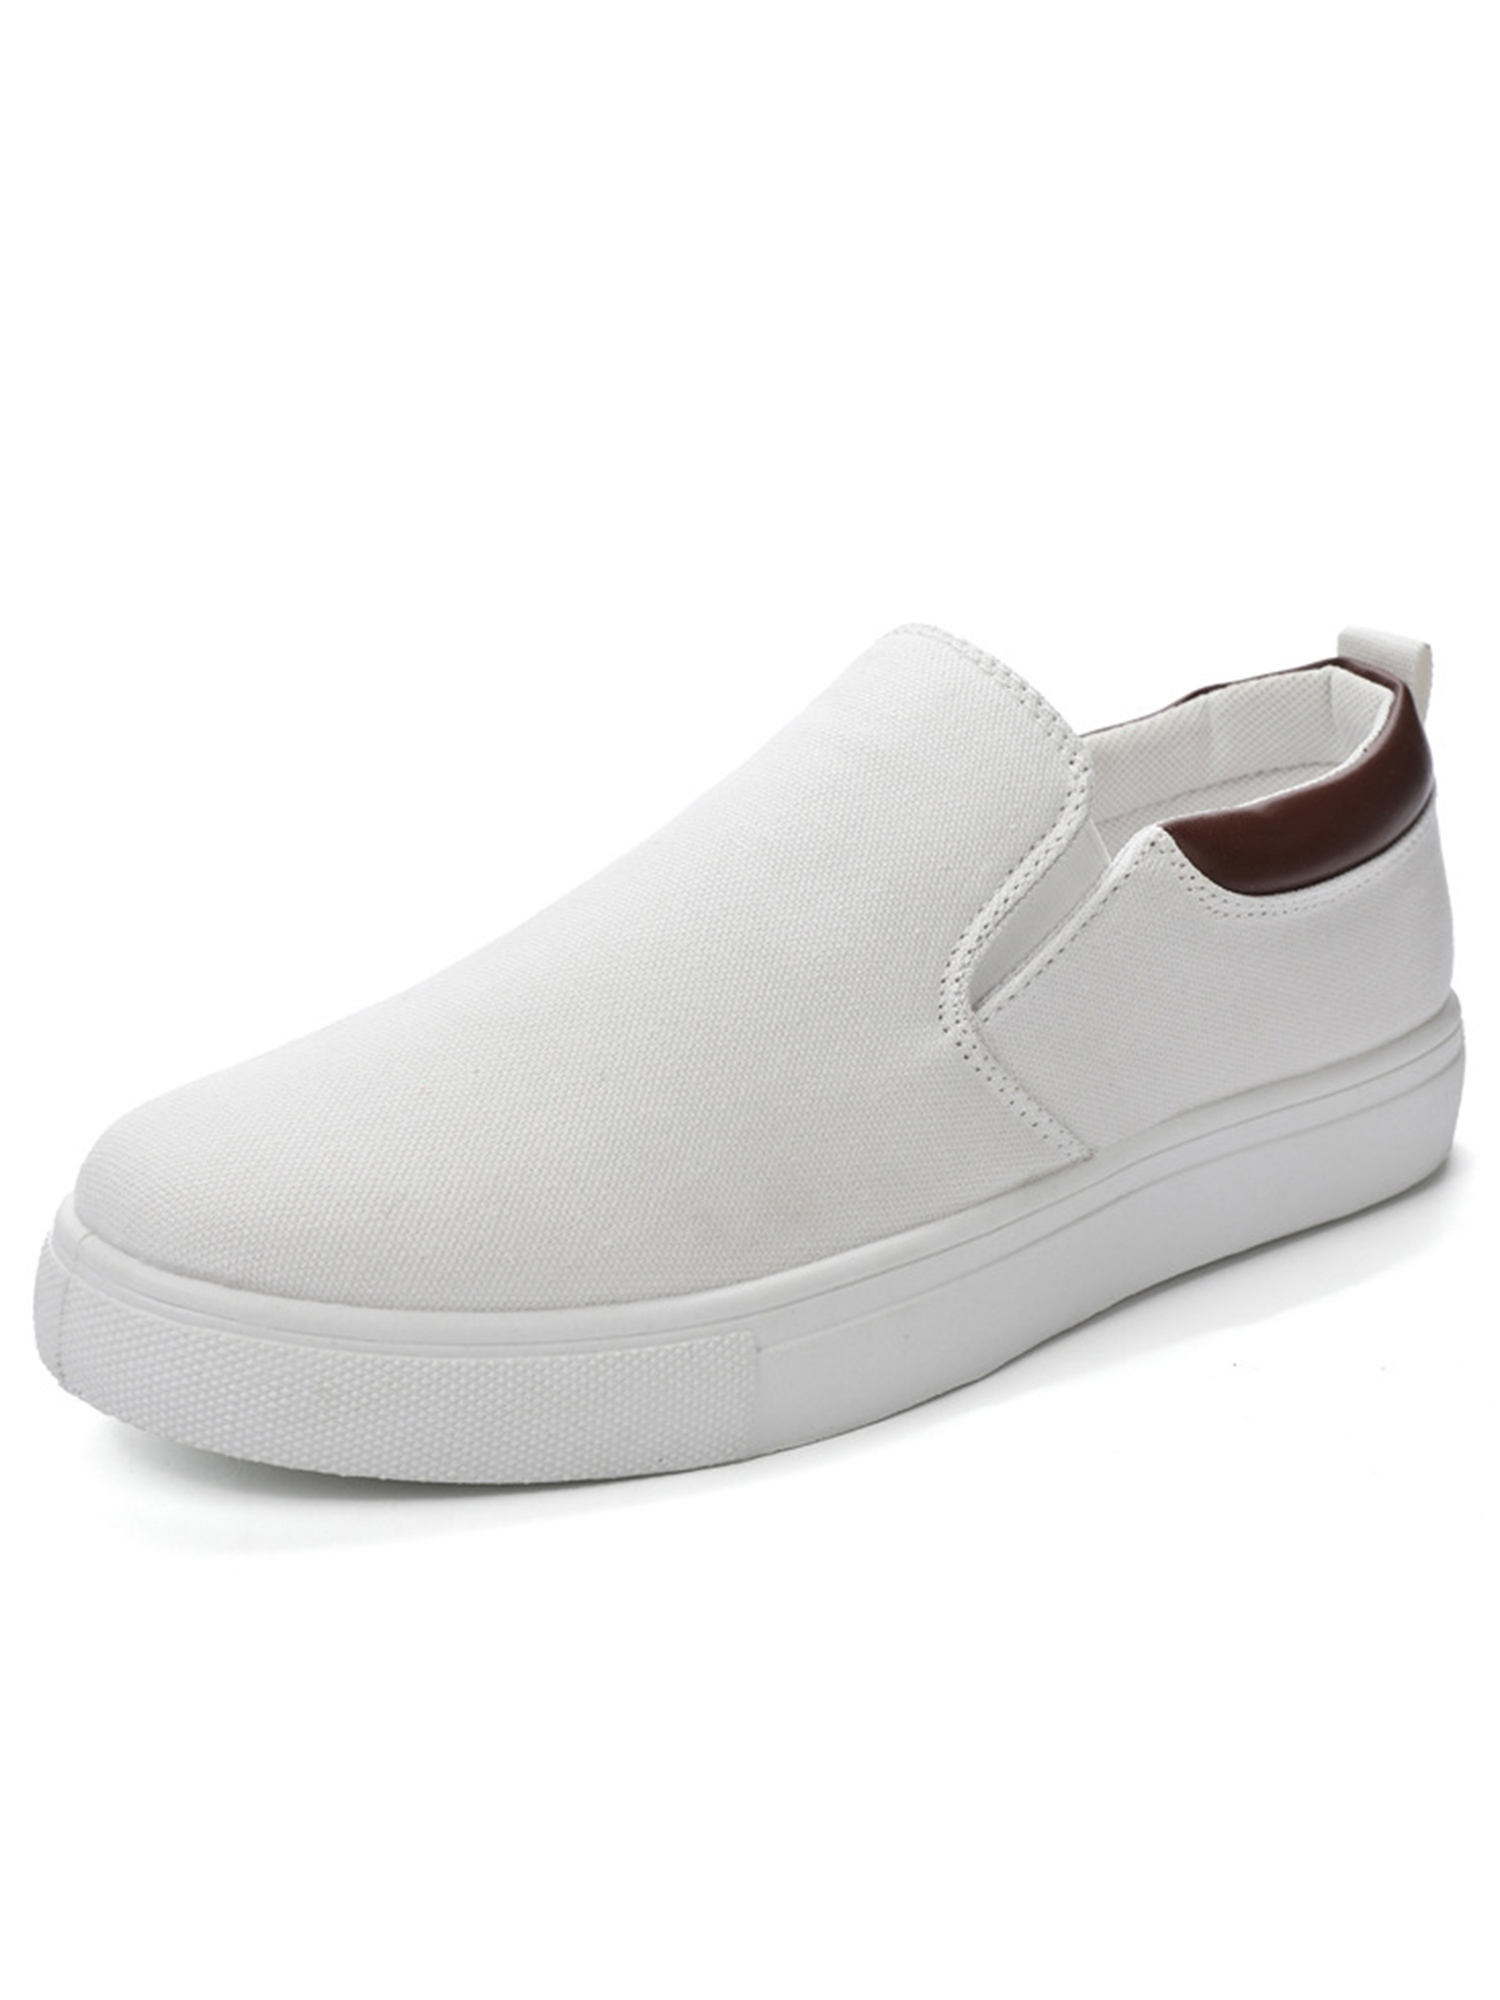 SIMANLAN Mens Comfort Slip On Canvas Shoes Non-Slip Lightweight Low Top ...